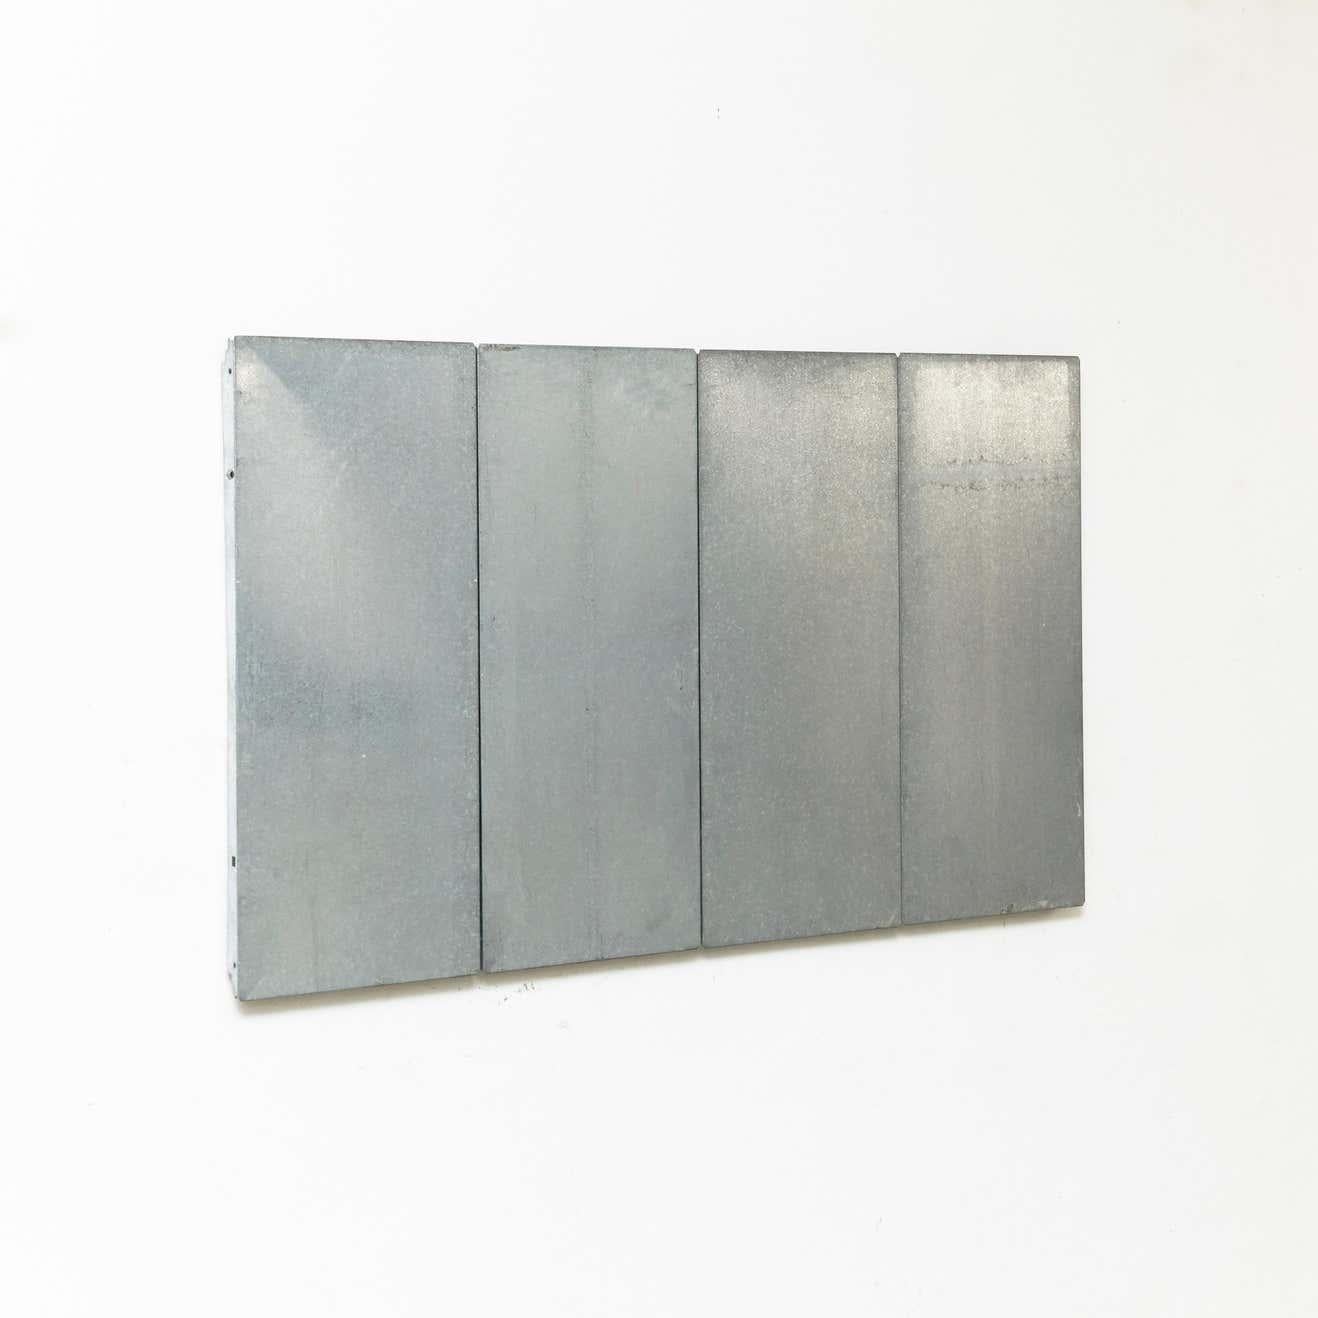 Ramon Horts Minimalist Contemporary Artwork 1/5 N 023 For Sale 2